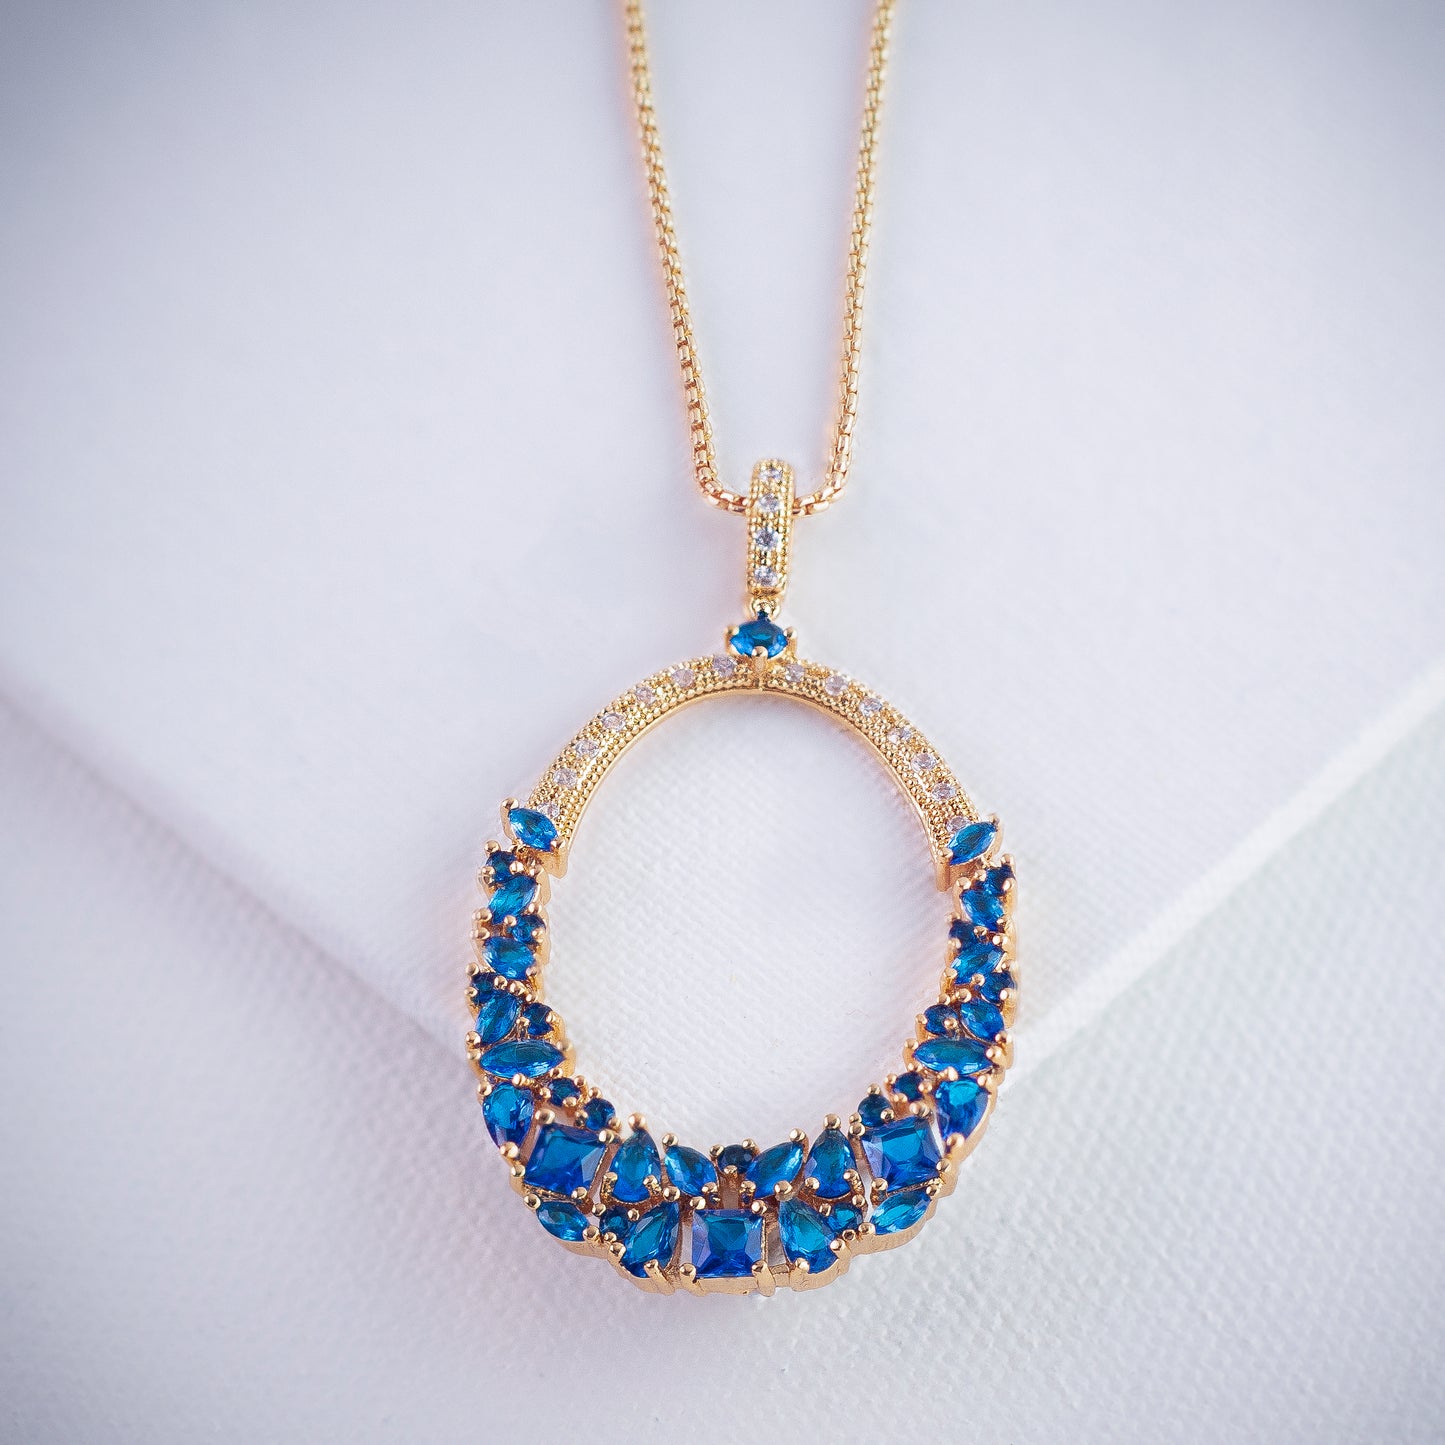 Gift Kanoor Pendant - Blue - Kuberlo - Best Gift for - Imitation Jewellery - Designer Jewellery - one gram gold - fashion jewellery